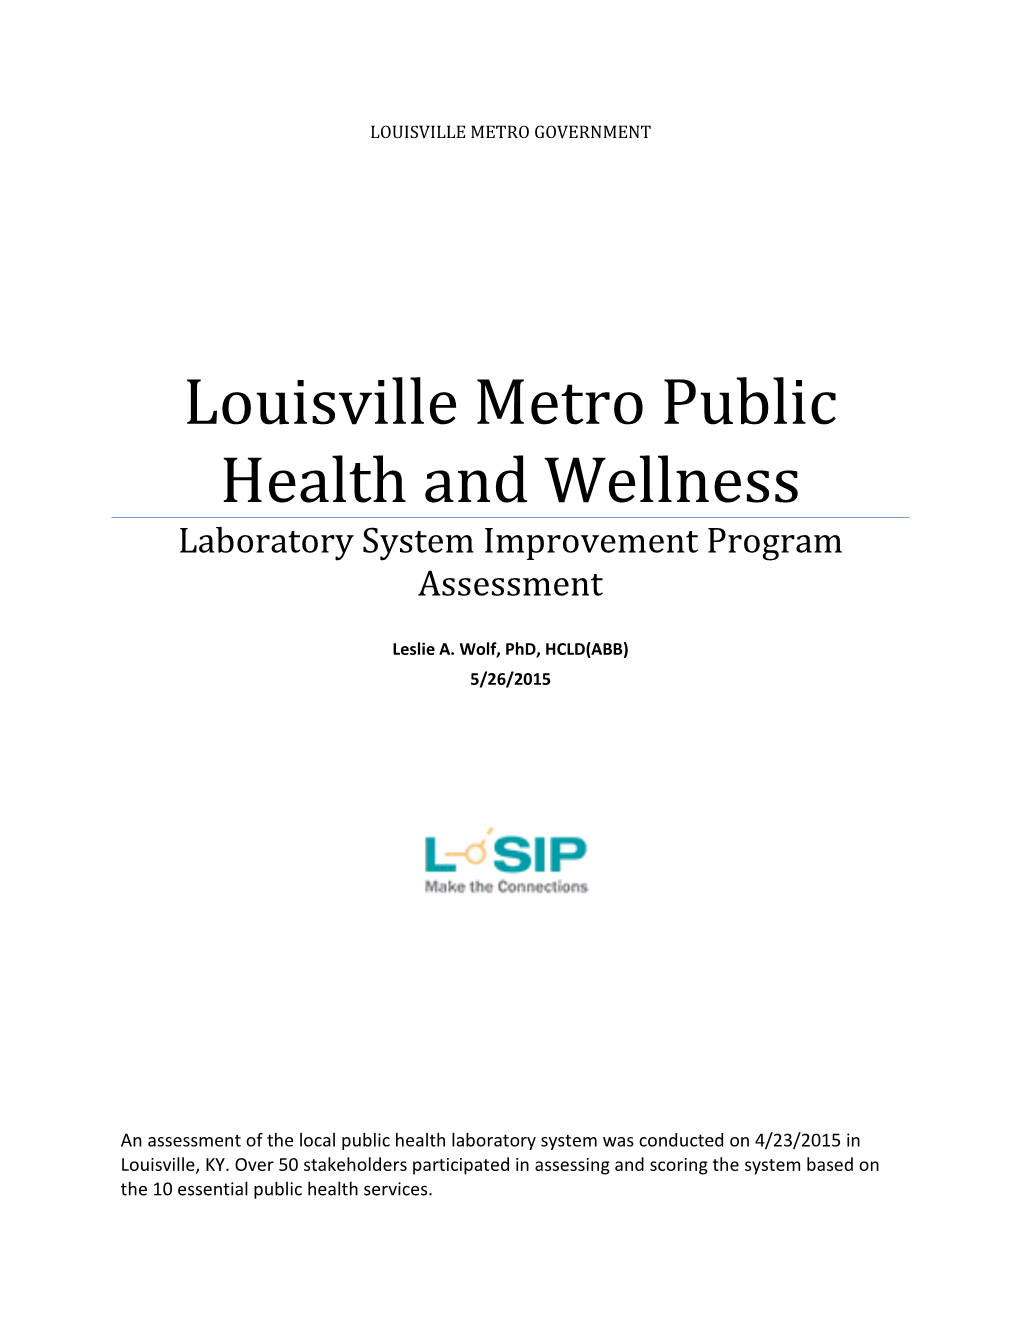 Louisville Metro Public Health and Wellness Laboratory System Improvement Program Assessment